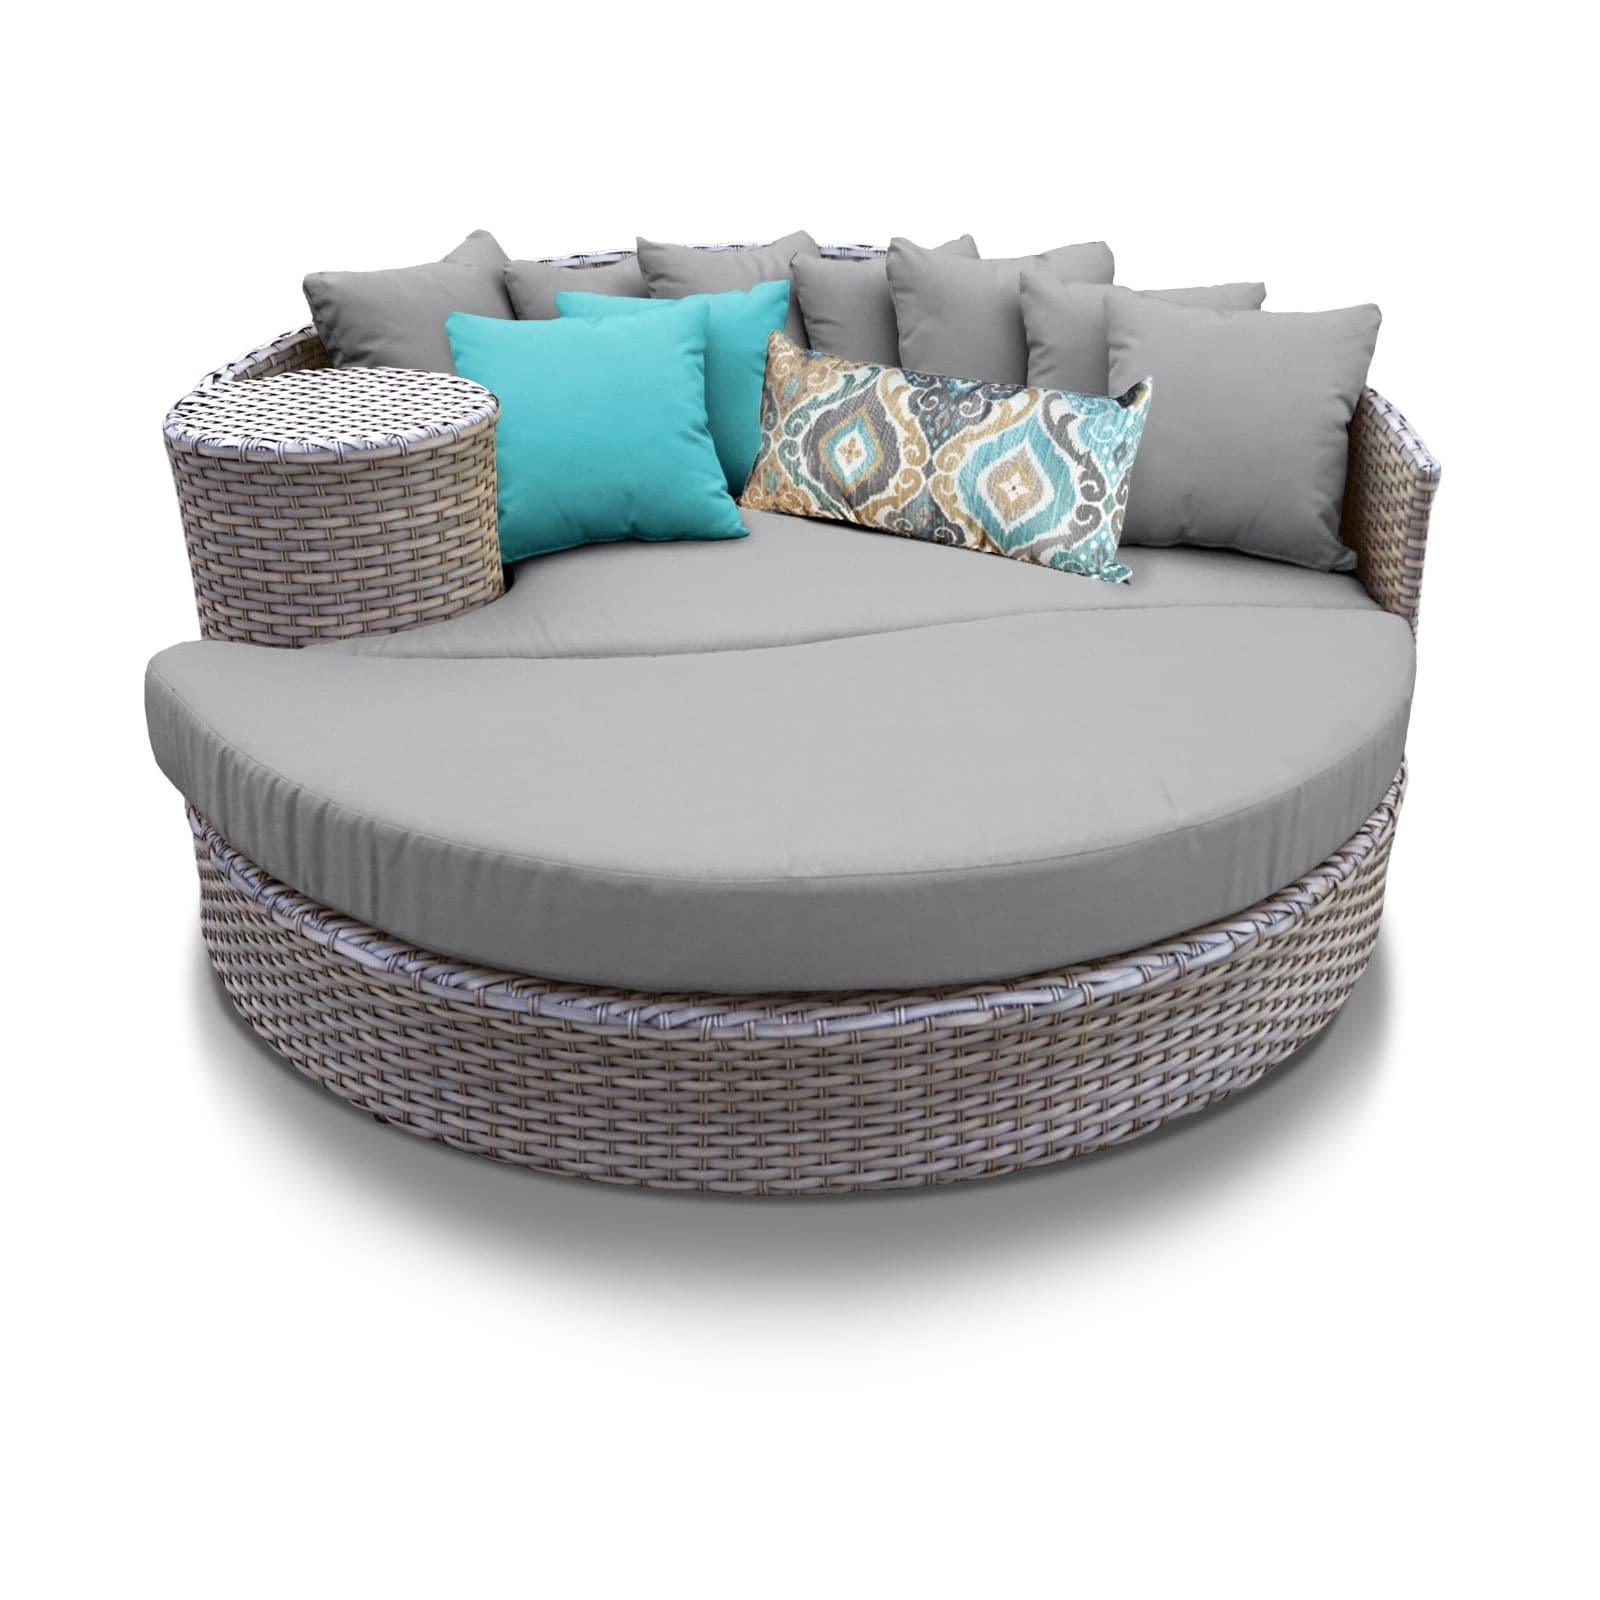 Oasis Circular Sun Bed - Outdoor Wicker Patio Furniture